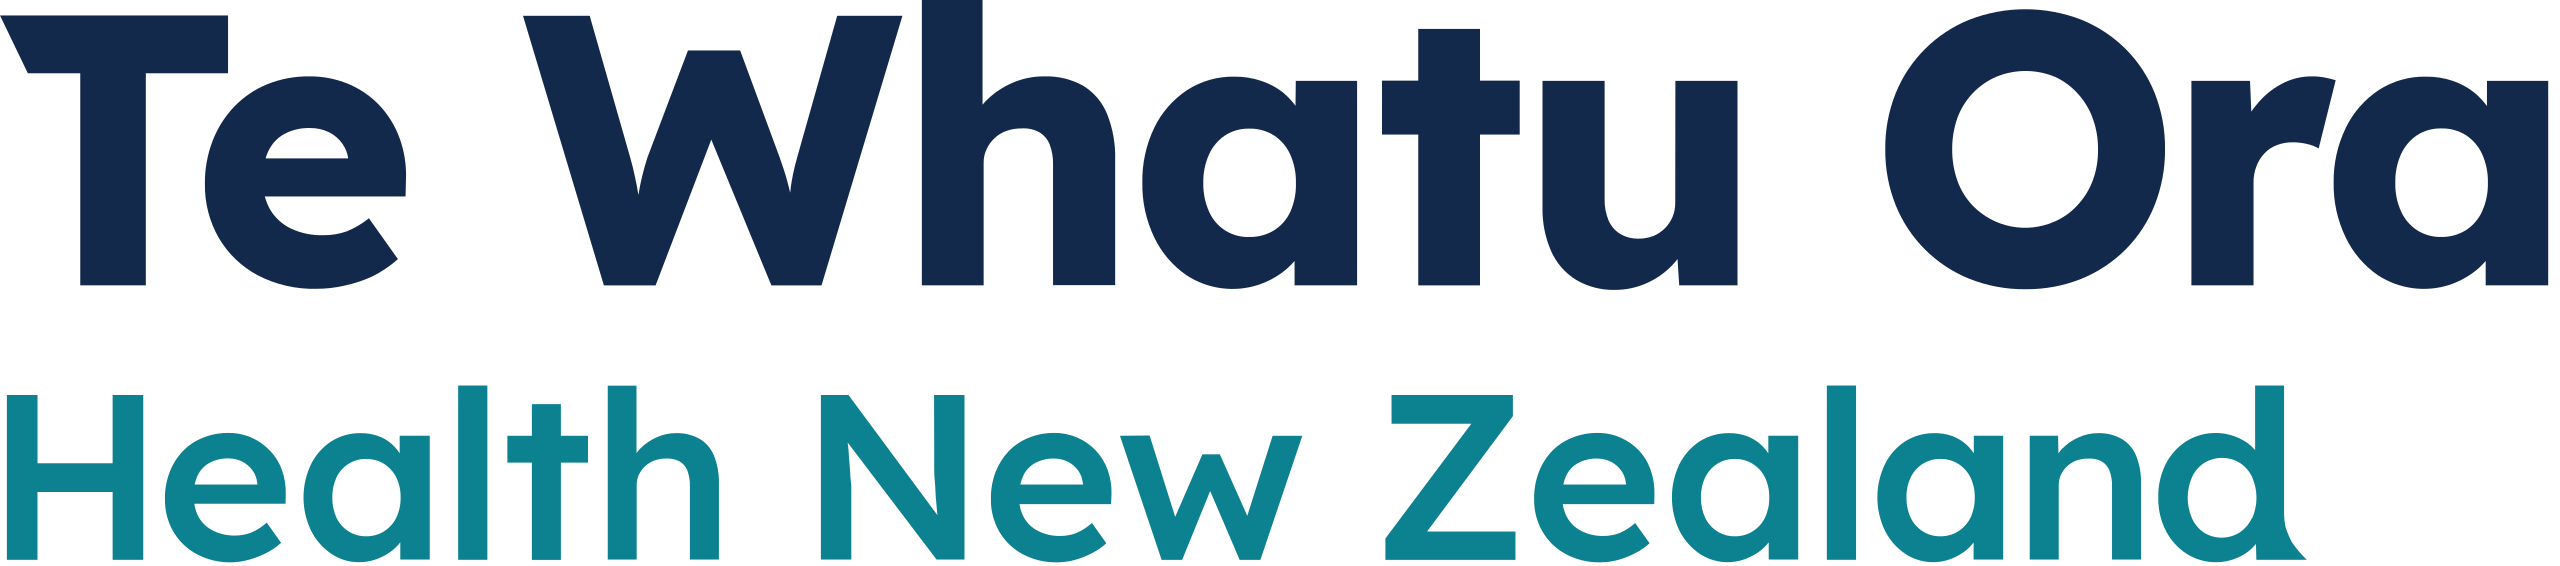 Health New Zealand logo.svg